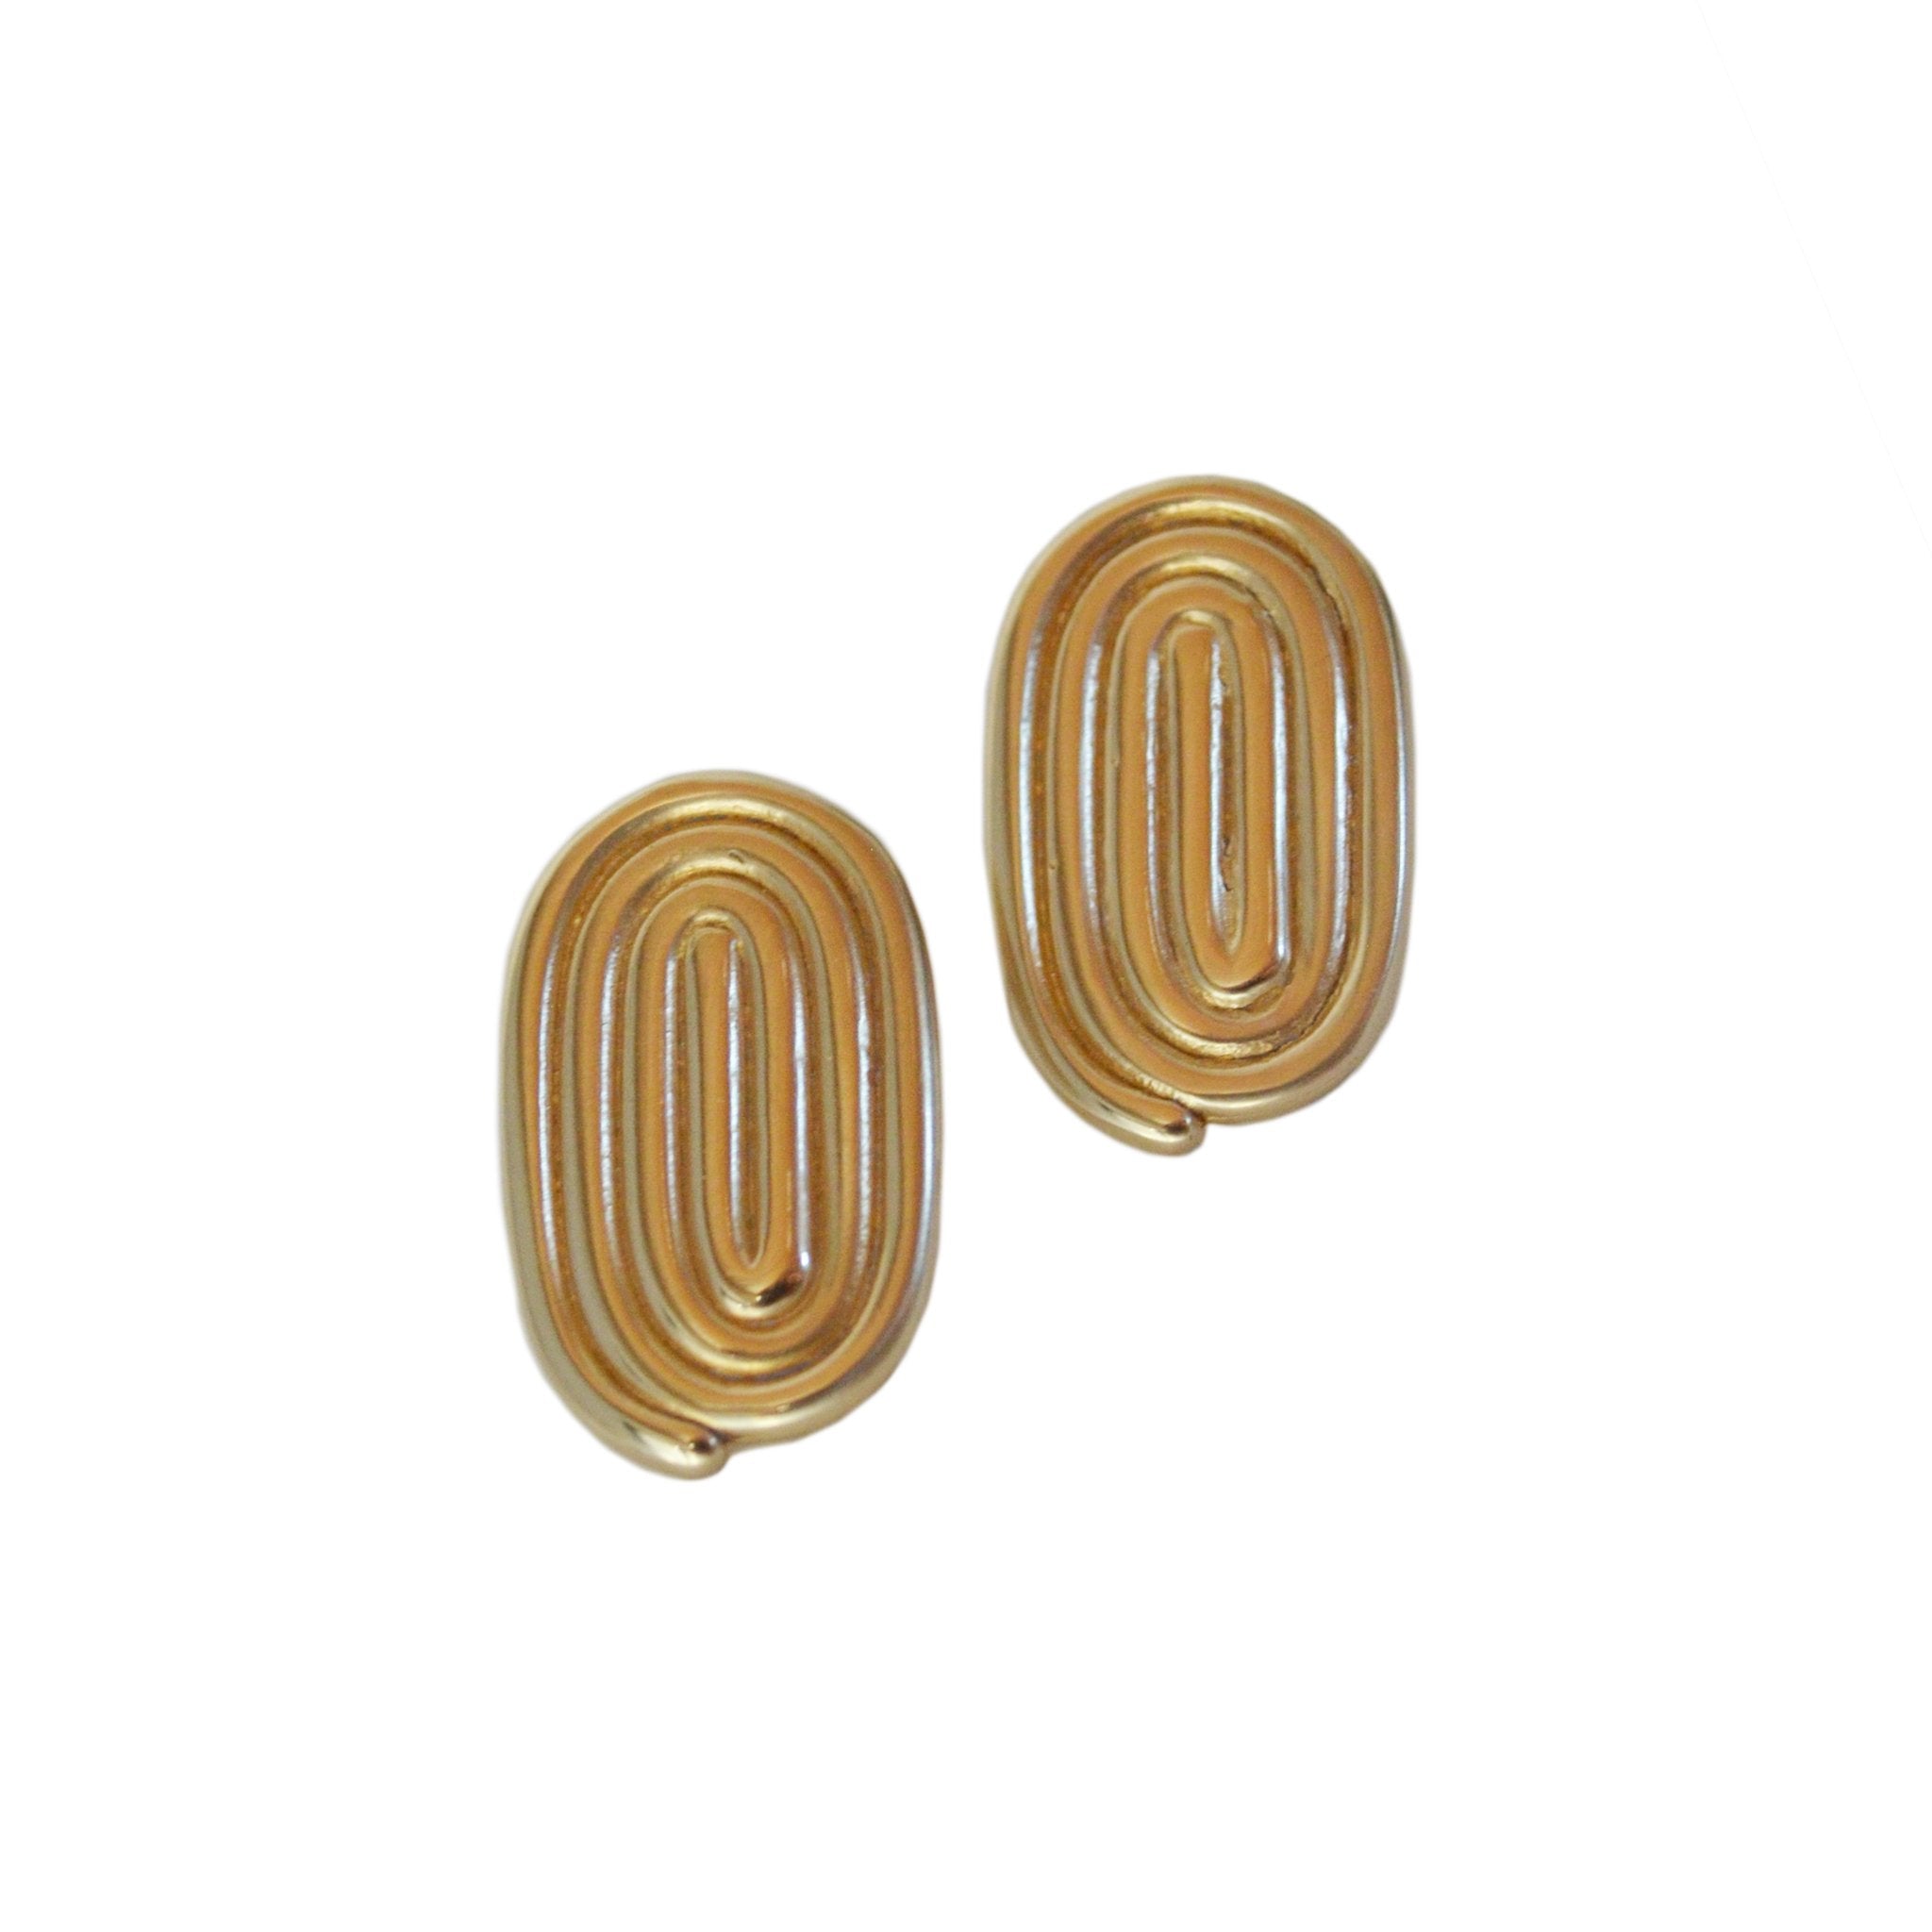 Pair of tiny solid 14k gold spiral hoop earrings